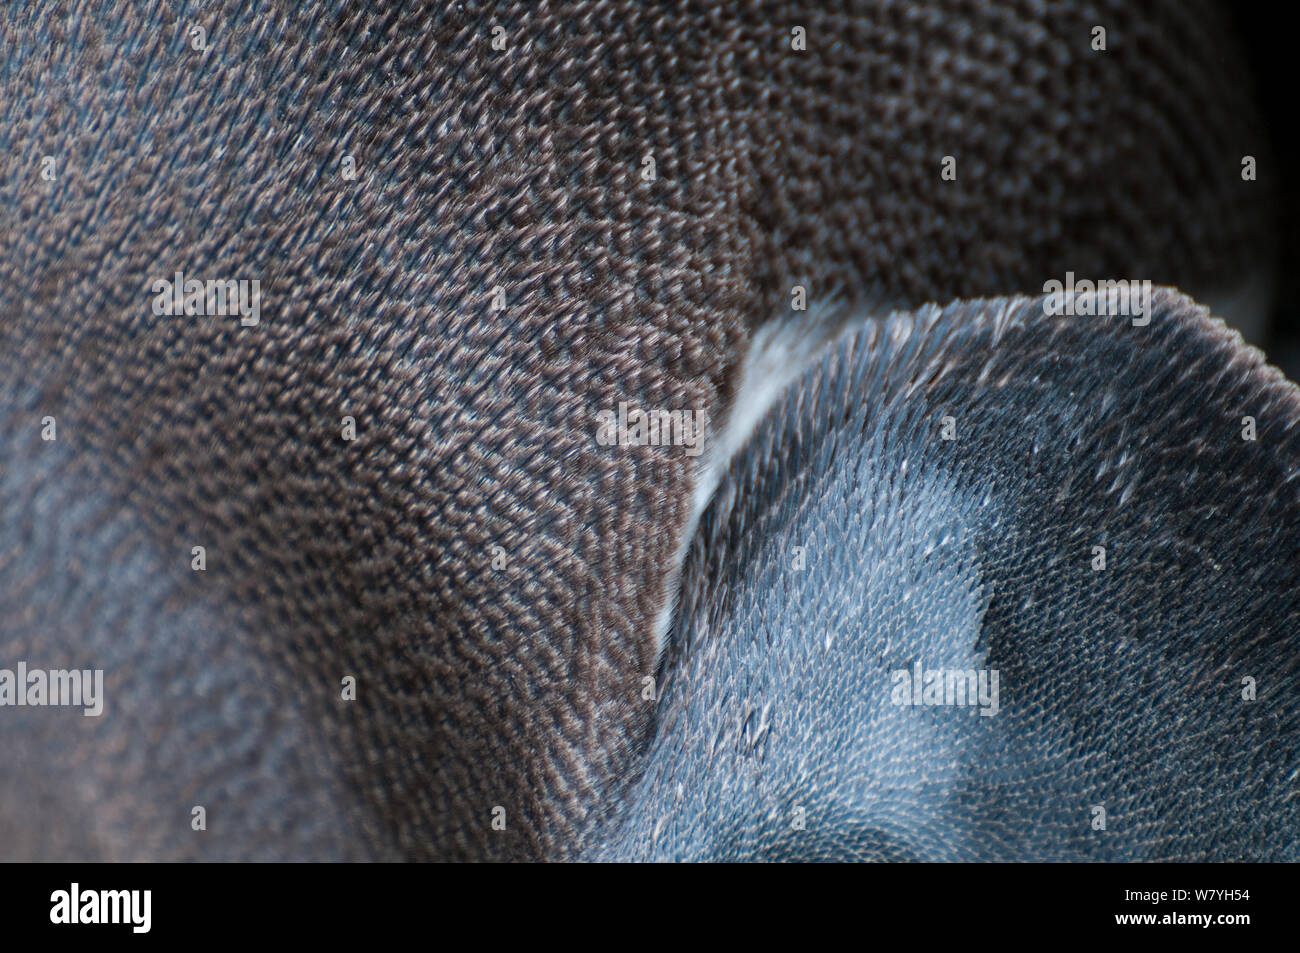 Pinguini Humboldt (Spheniscus Humboldti) close-up di piuma dettaglio. Tilgo isola, La Serena, Cile. Le specie vulnerabili. Foto Stock